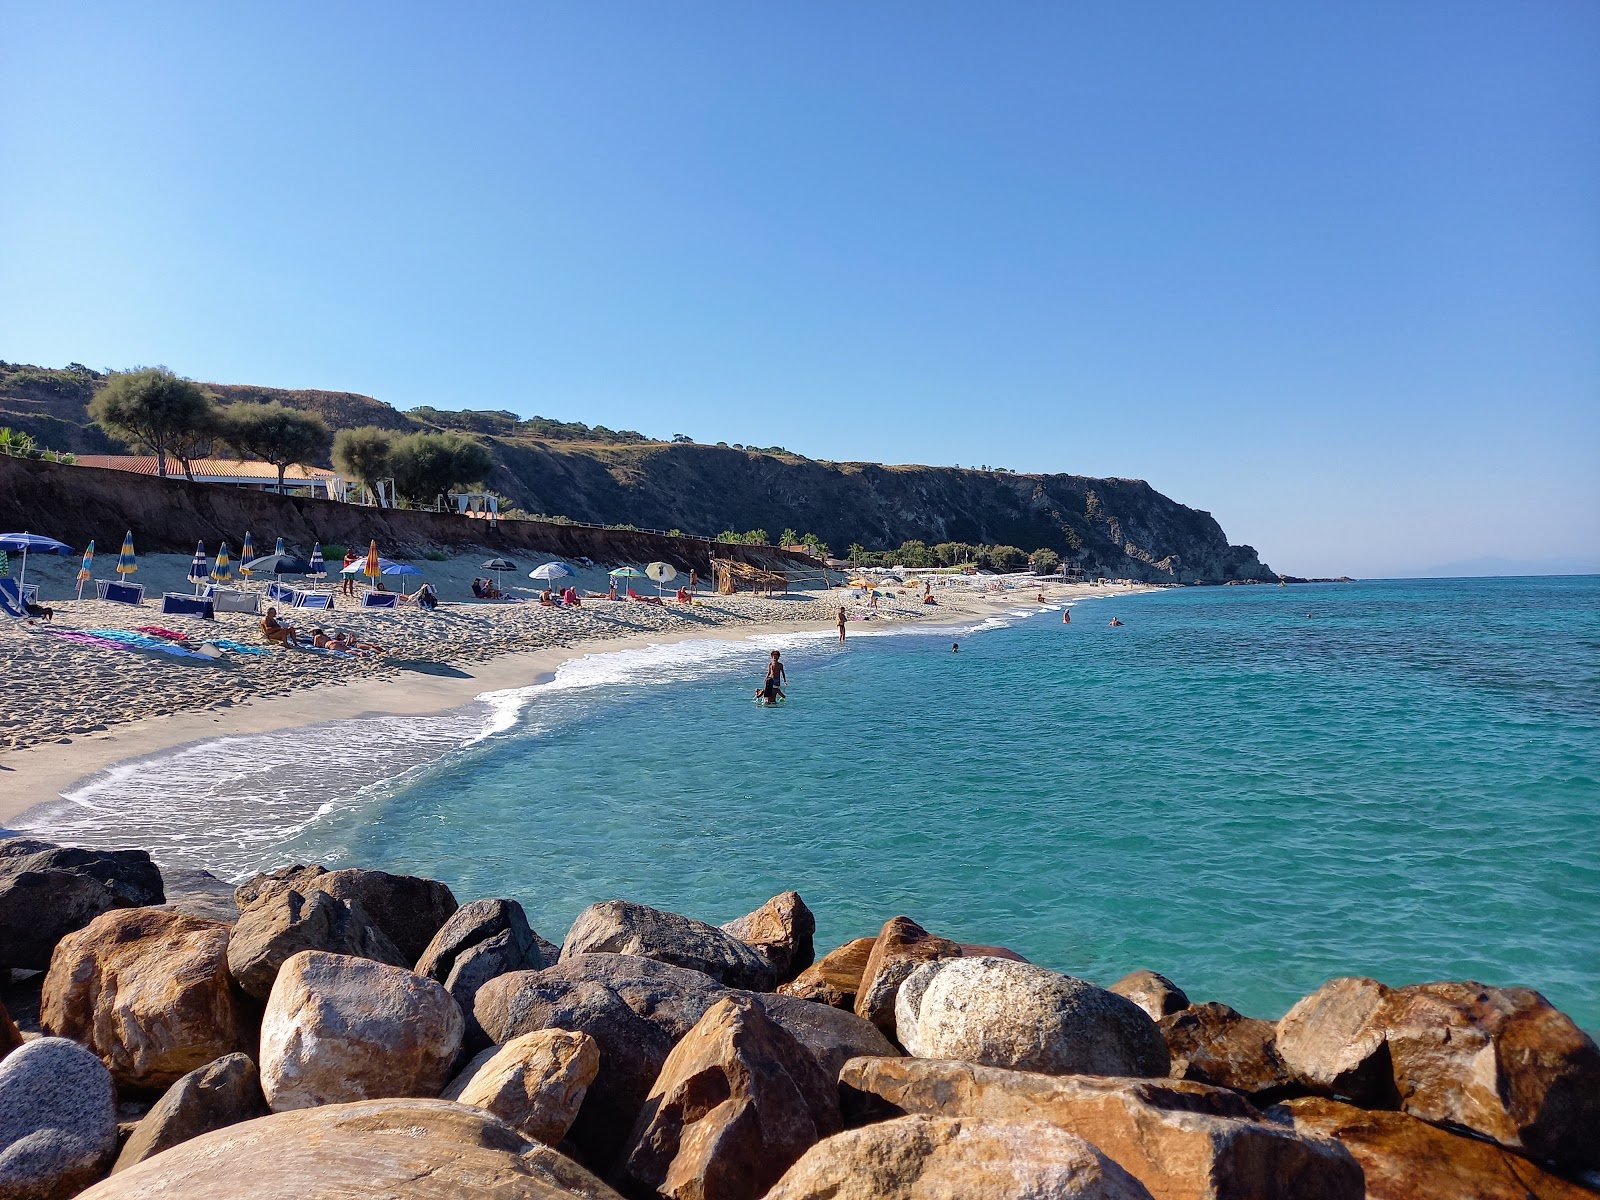 Spiaggia Tono'in fotoğrafı geniş plaj ile birlikte